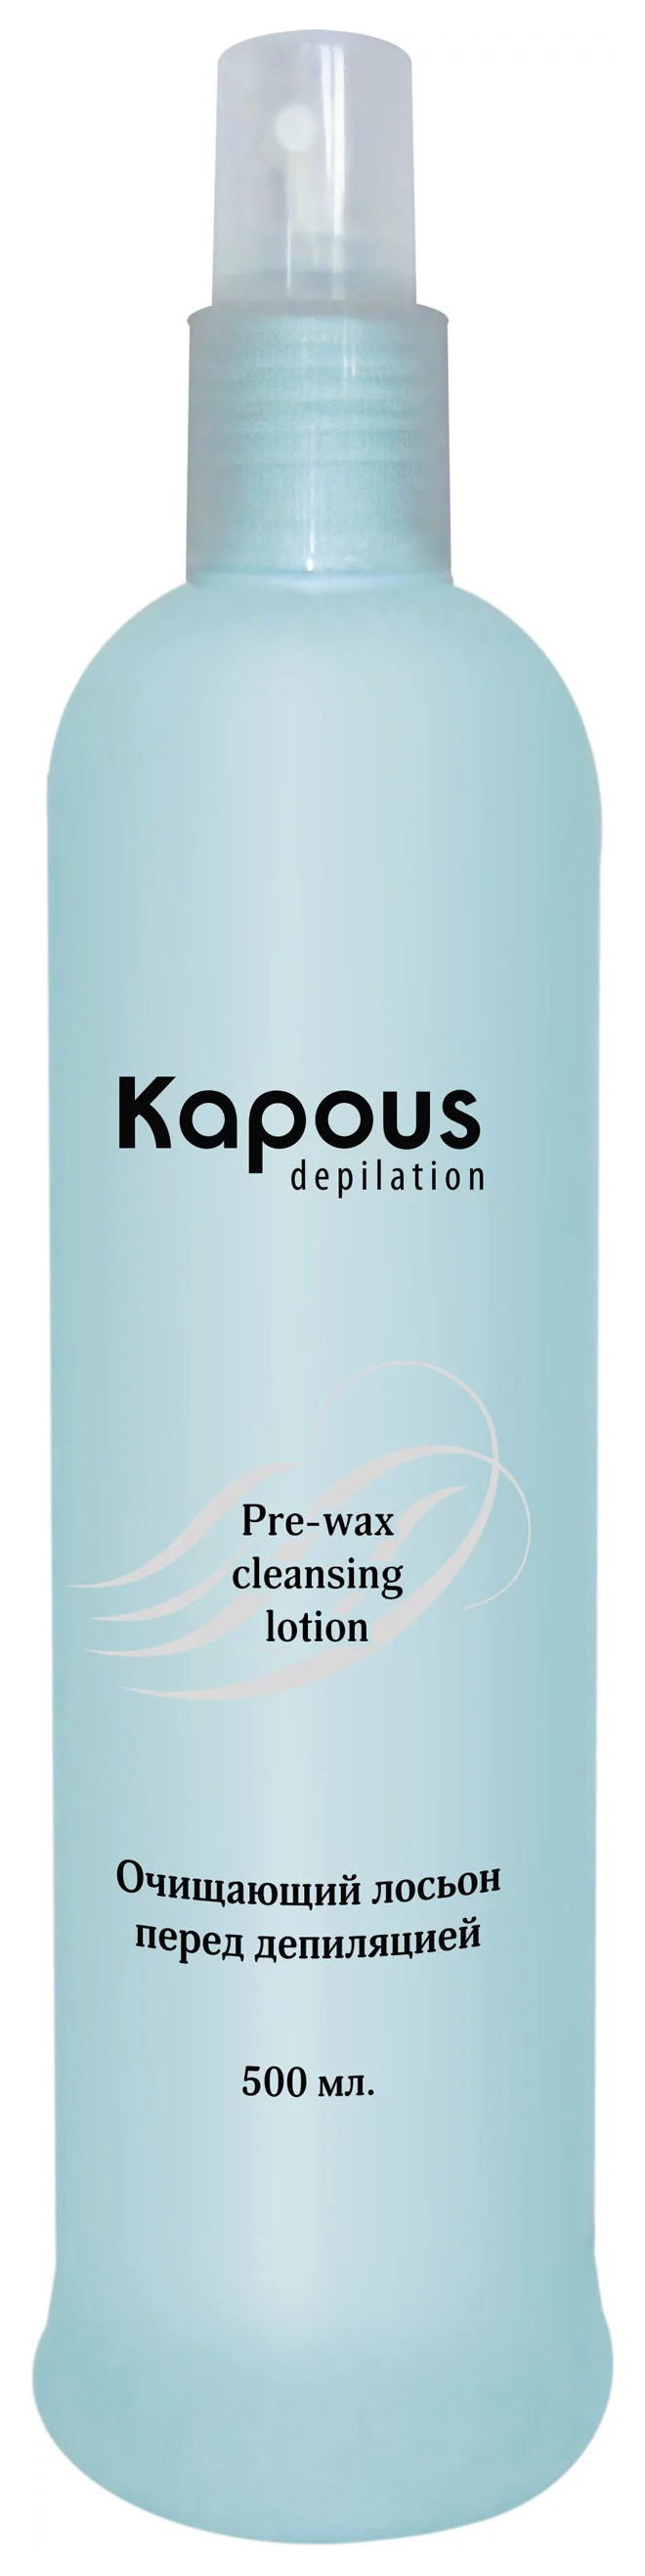 Очищающий лосьон перед депиляцией Kapous Professional 500 мл kapous лосьон очищающий перед депиляцией depilation 500 мл